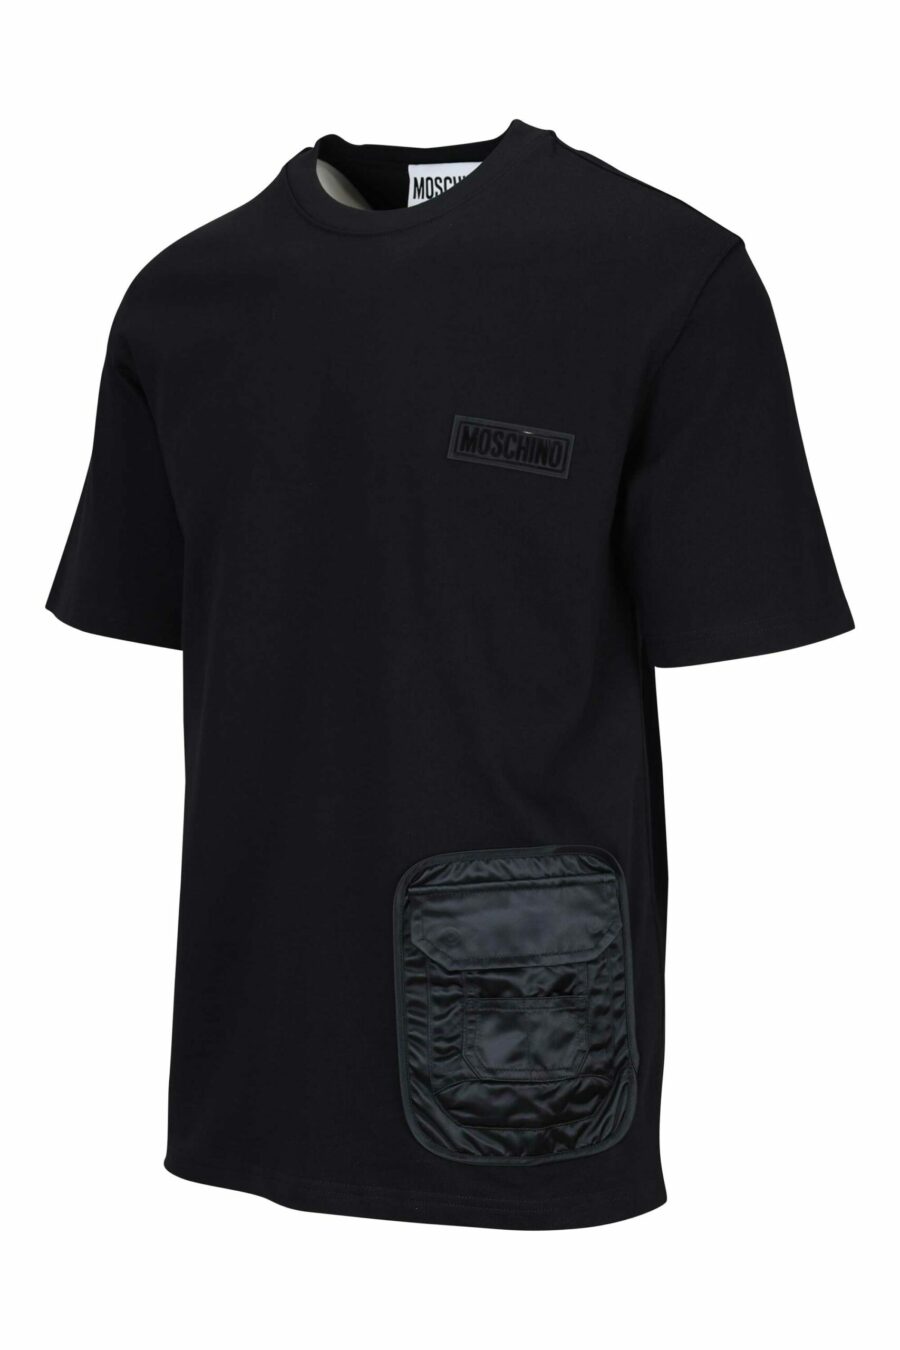 Camiseta negra mix con bolsillo y logo etiqueta monocromático - 667113452036 1 scaled